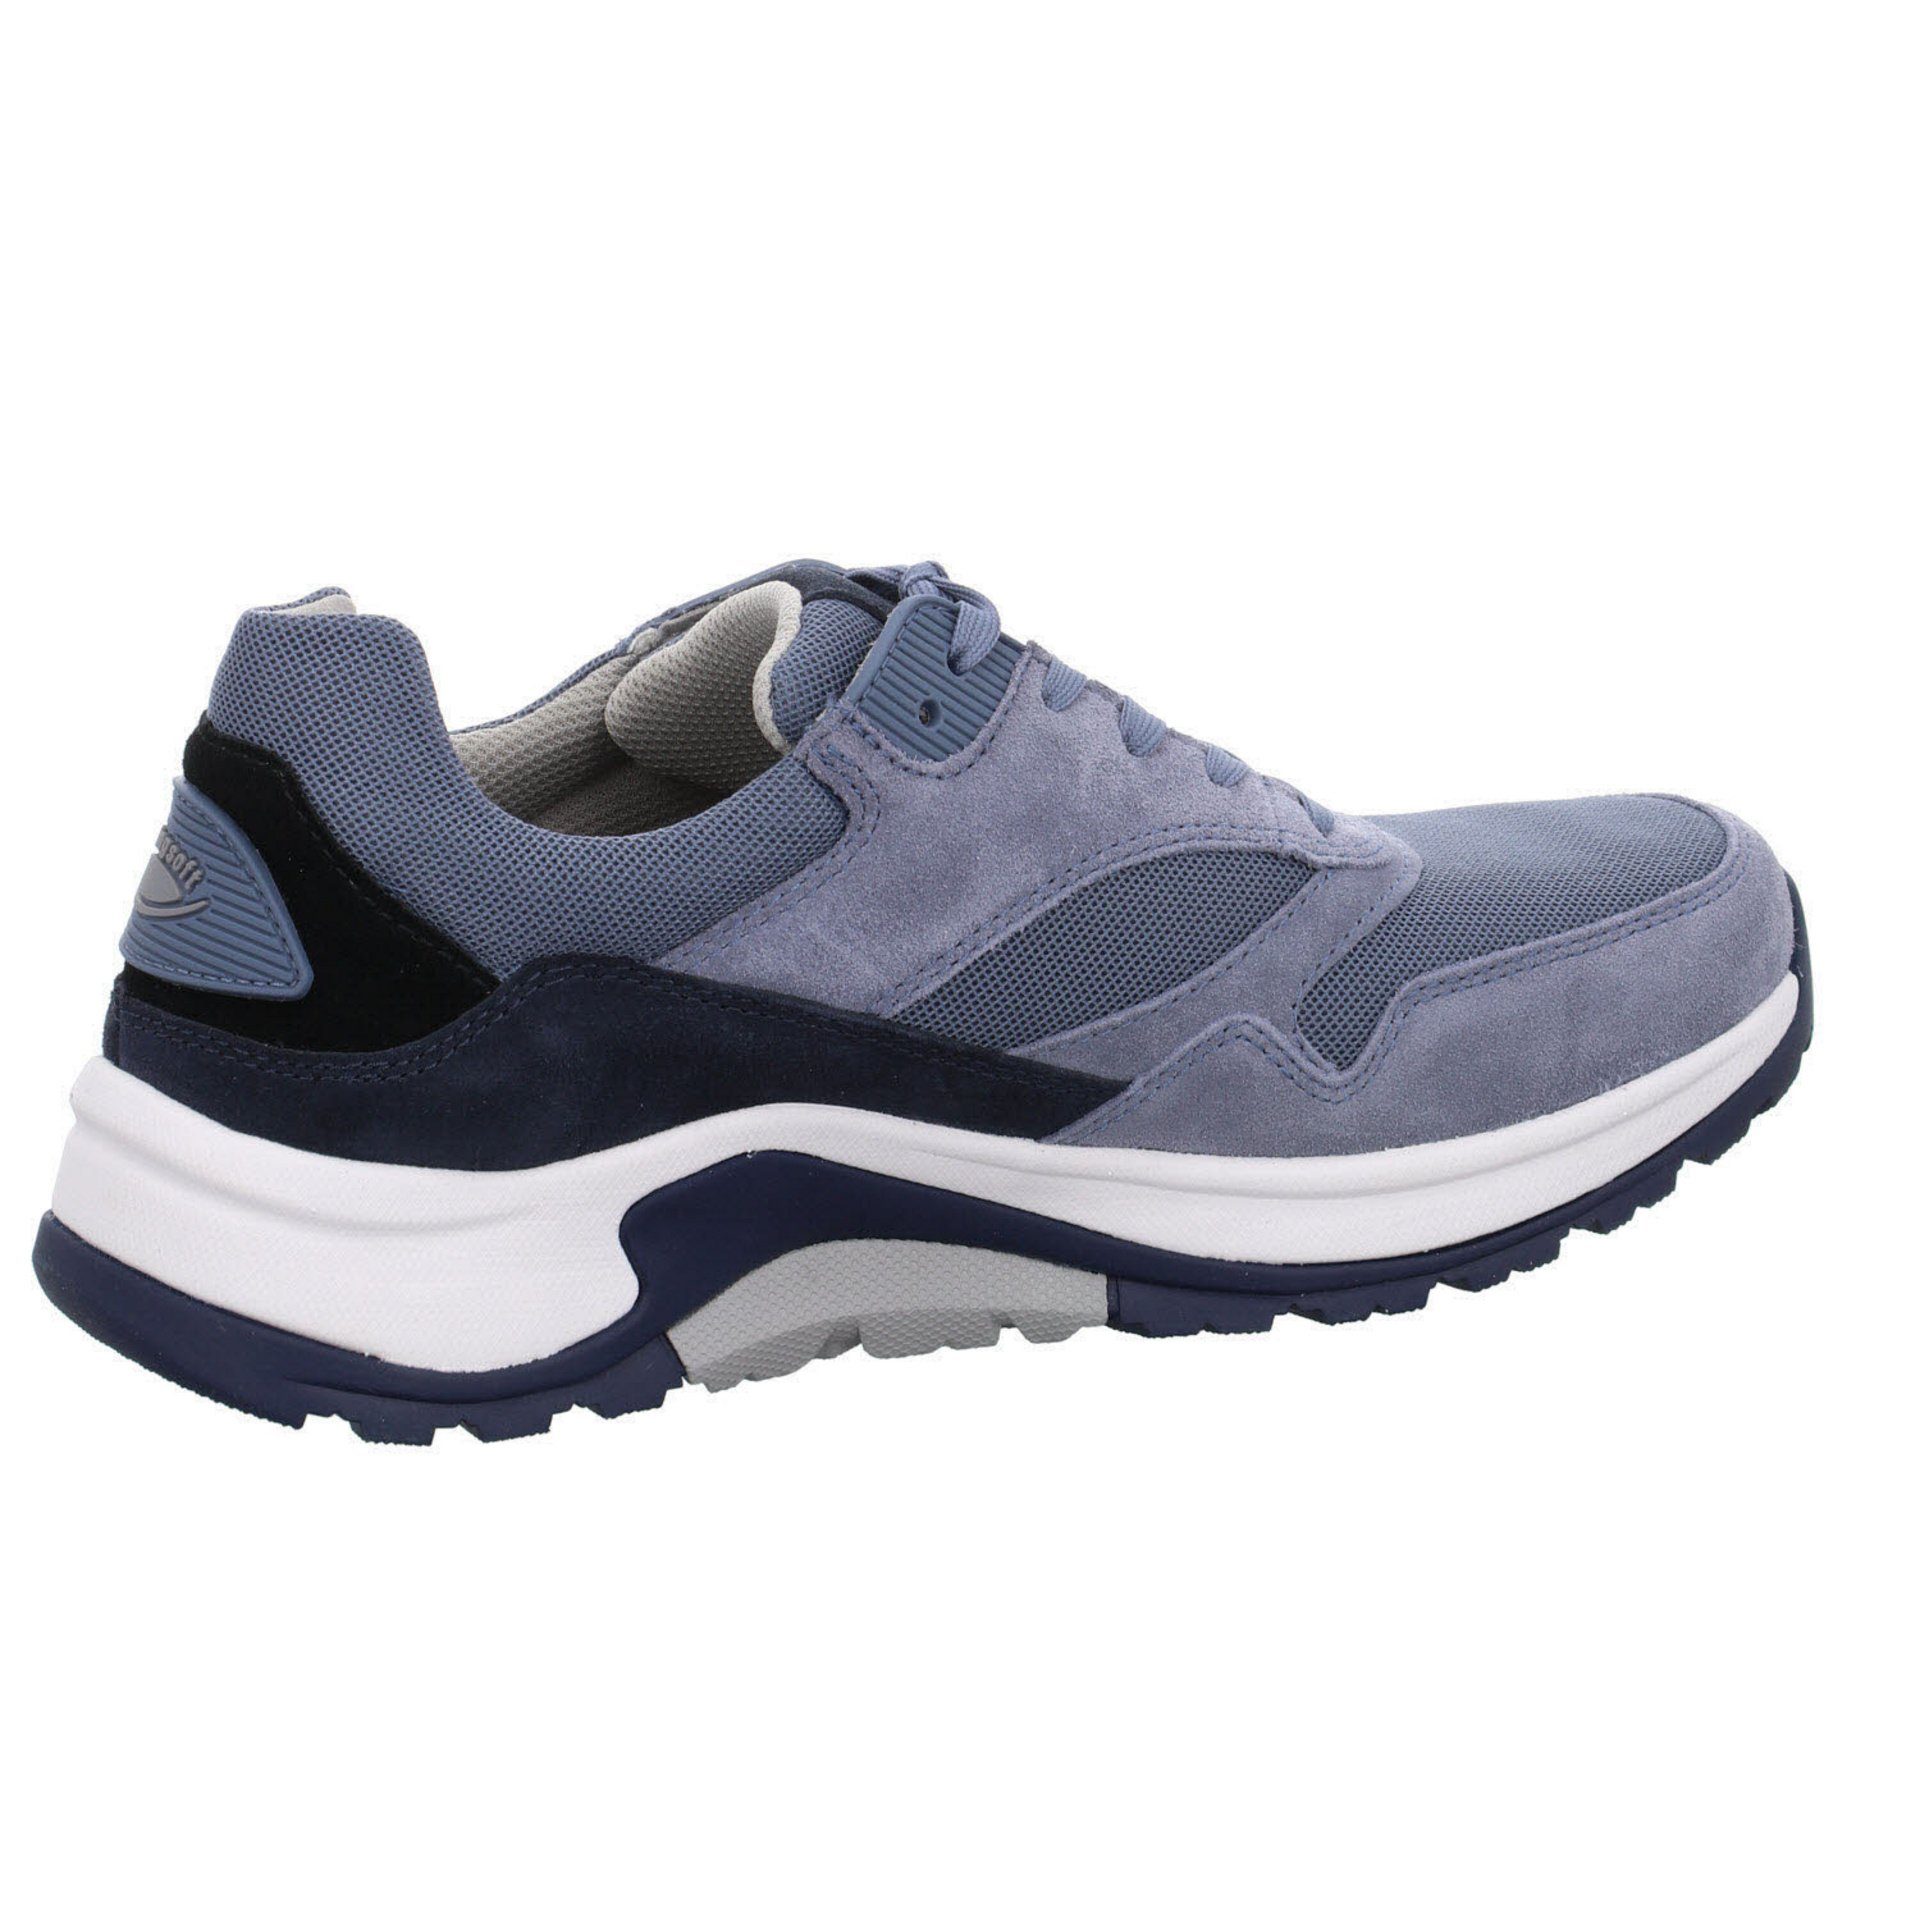 Pius Gabor Herren Sneaker Schuhe Schnürschuh hell blau Leder-/Textilkombination Rollingsoft Sneaker